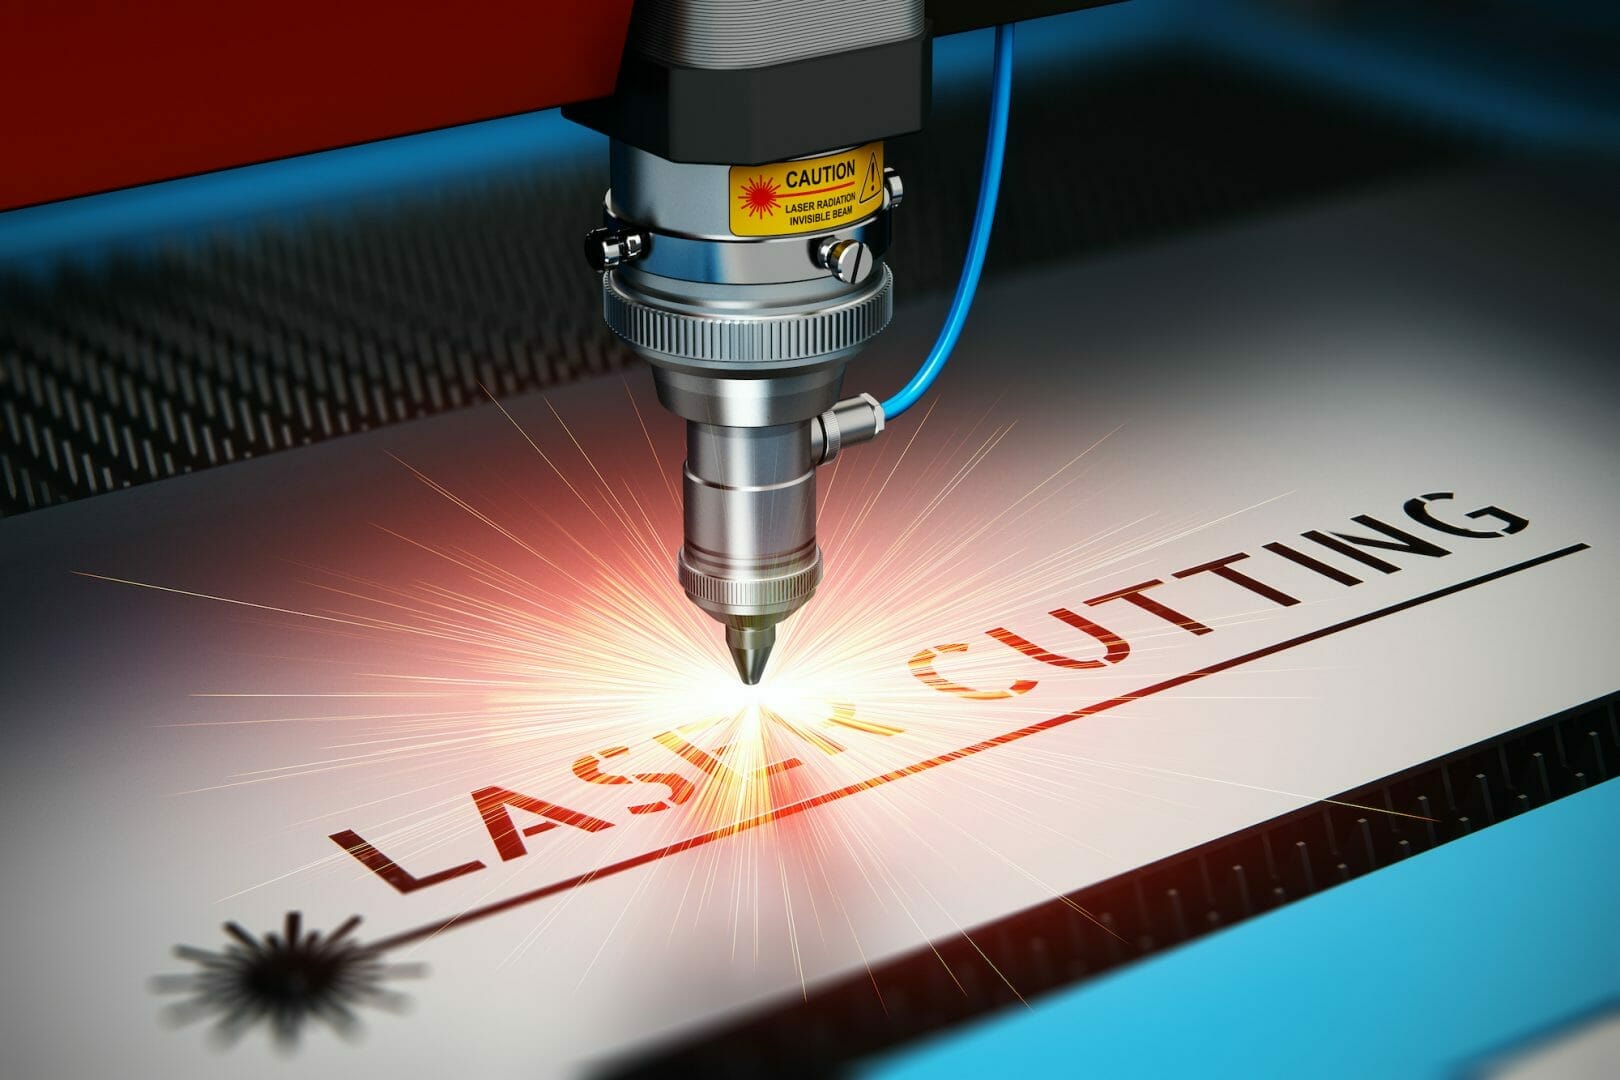 DIY Laser Engraver Design, Build, and Control - A2D Electronics